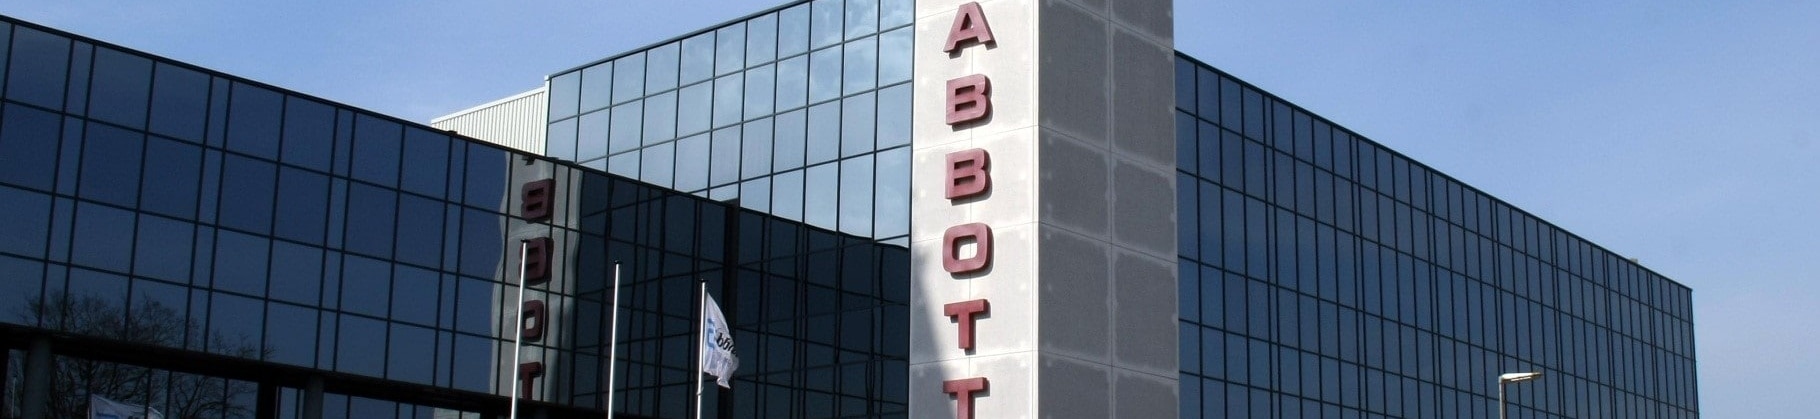 Abbott_Laboratories_te_Zwolle